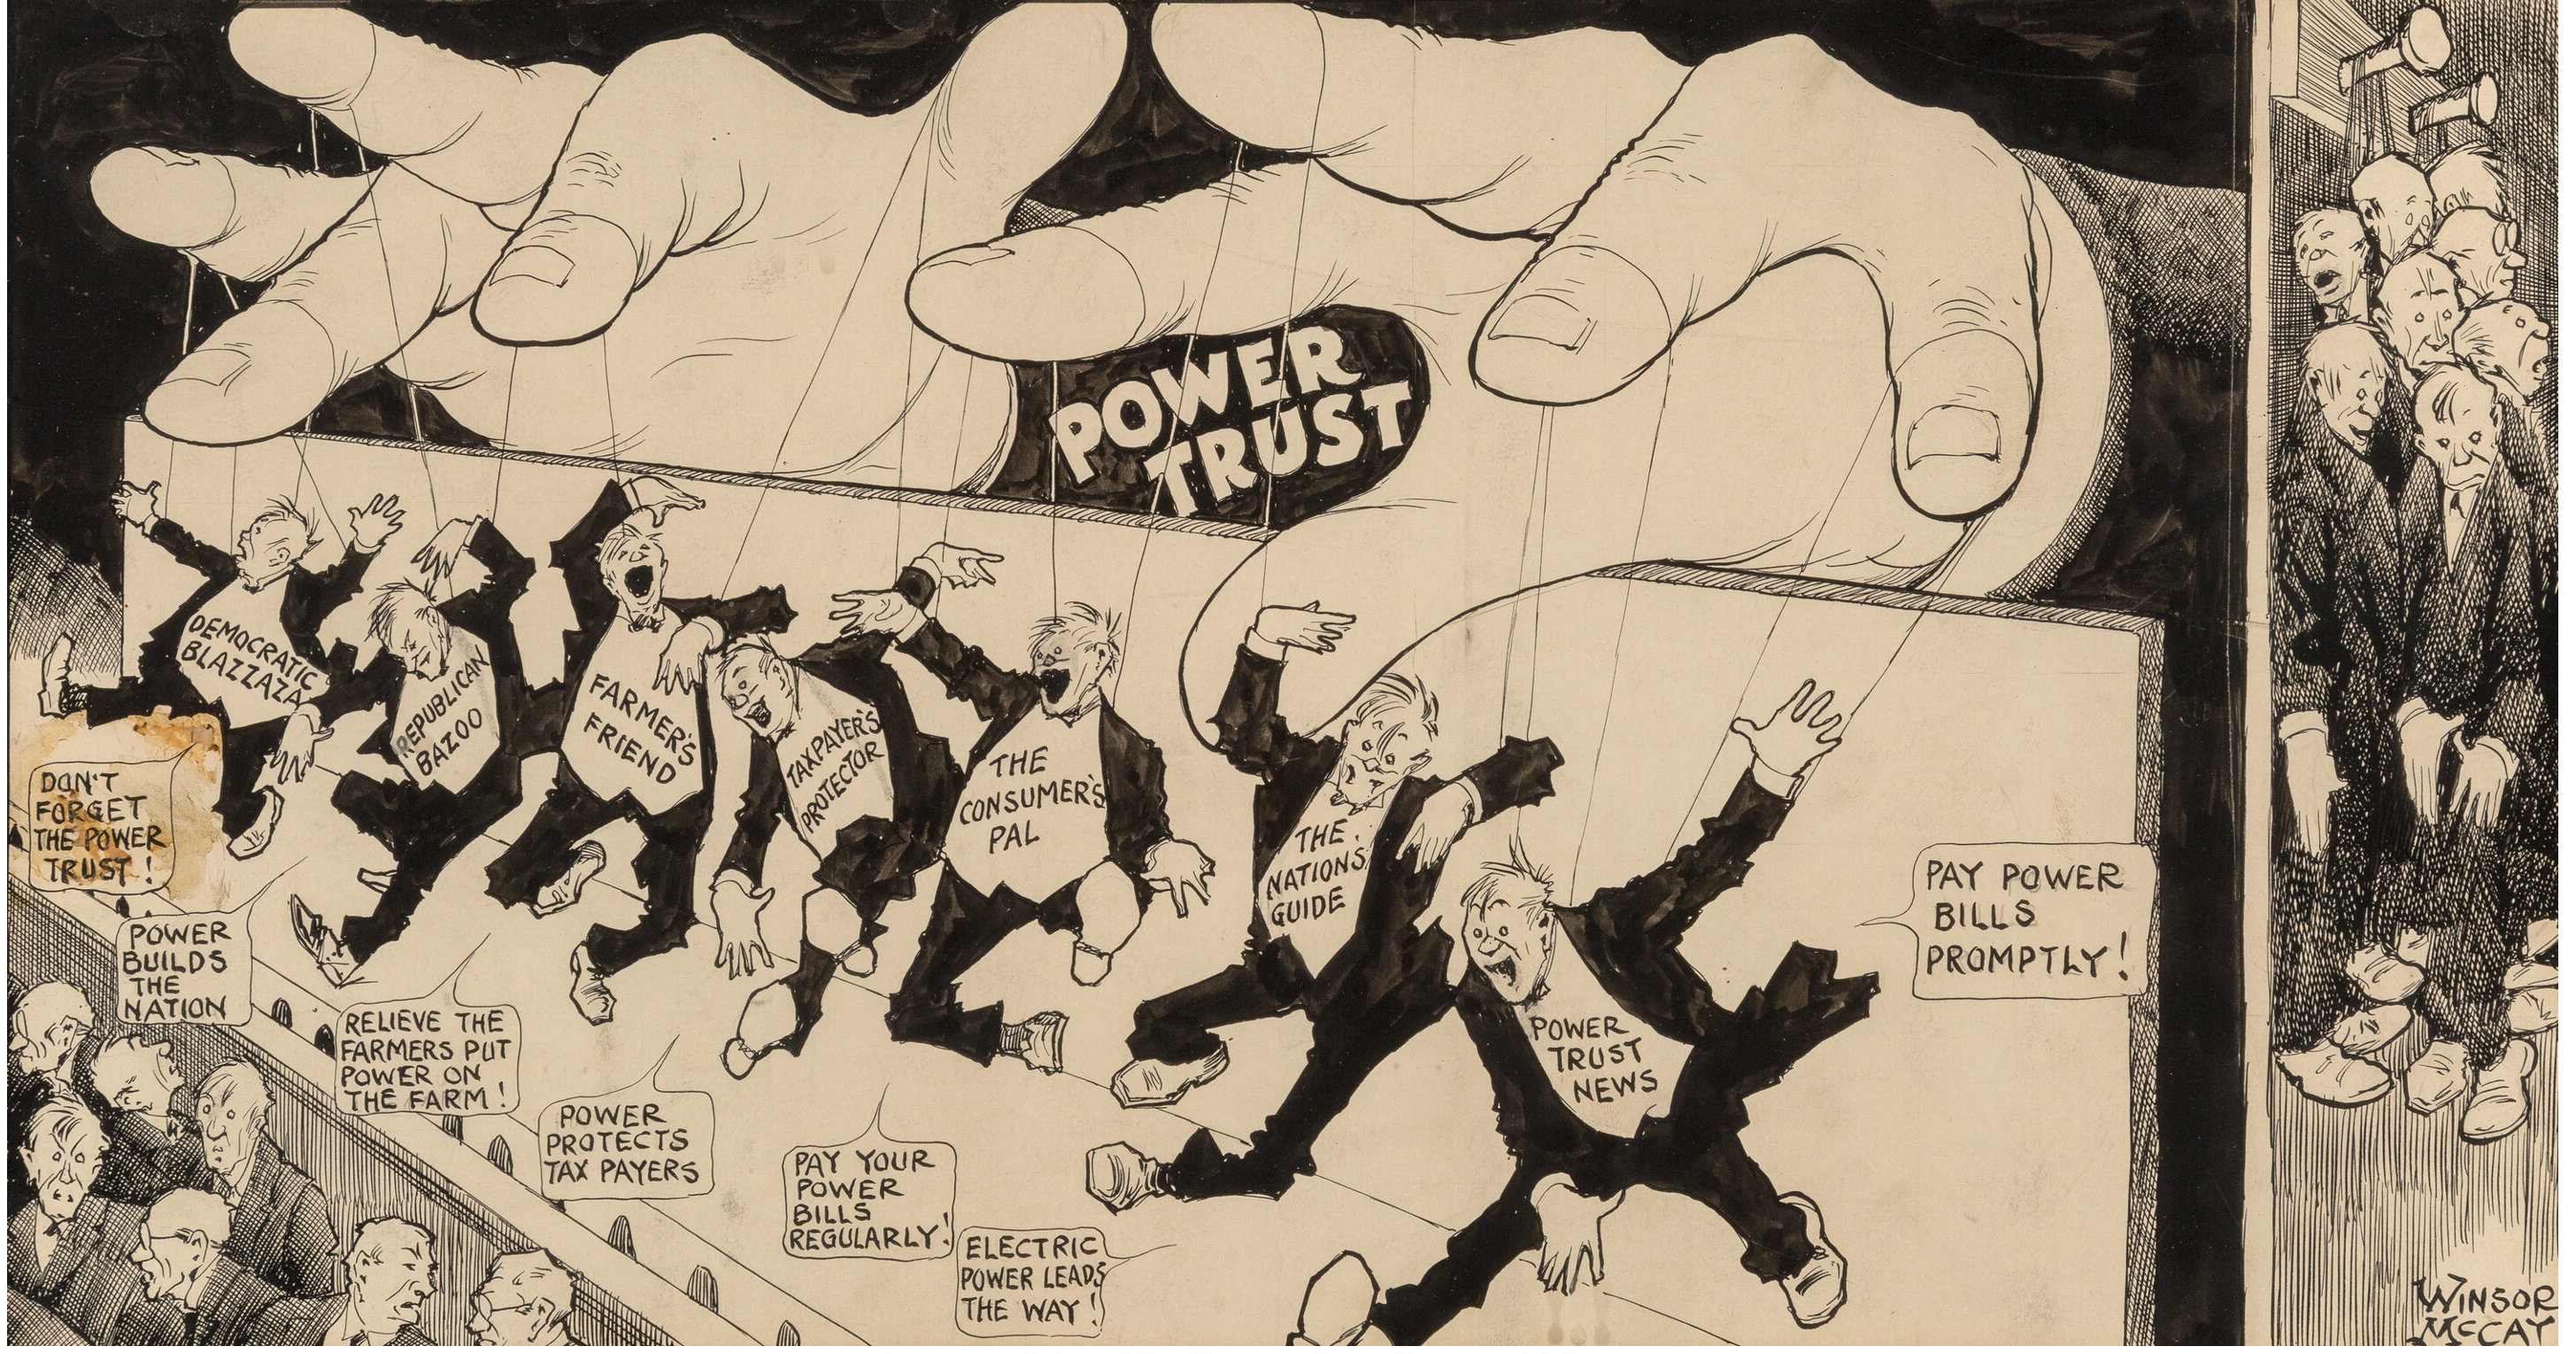 trusts political cartoon